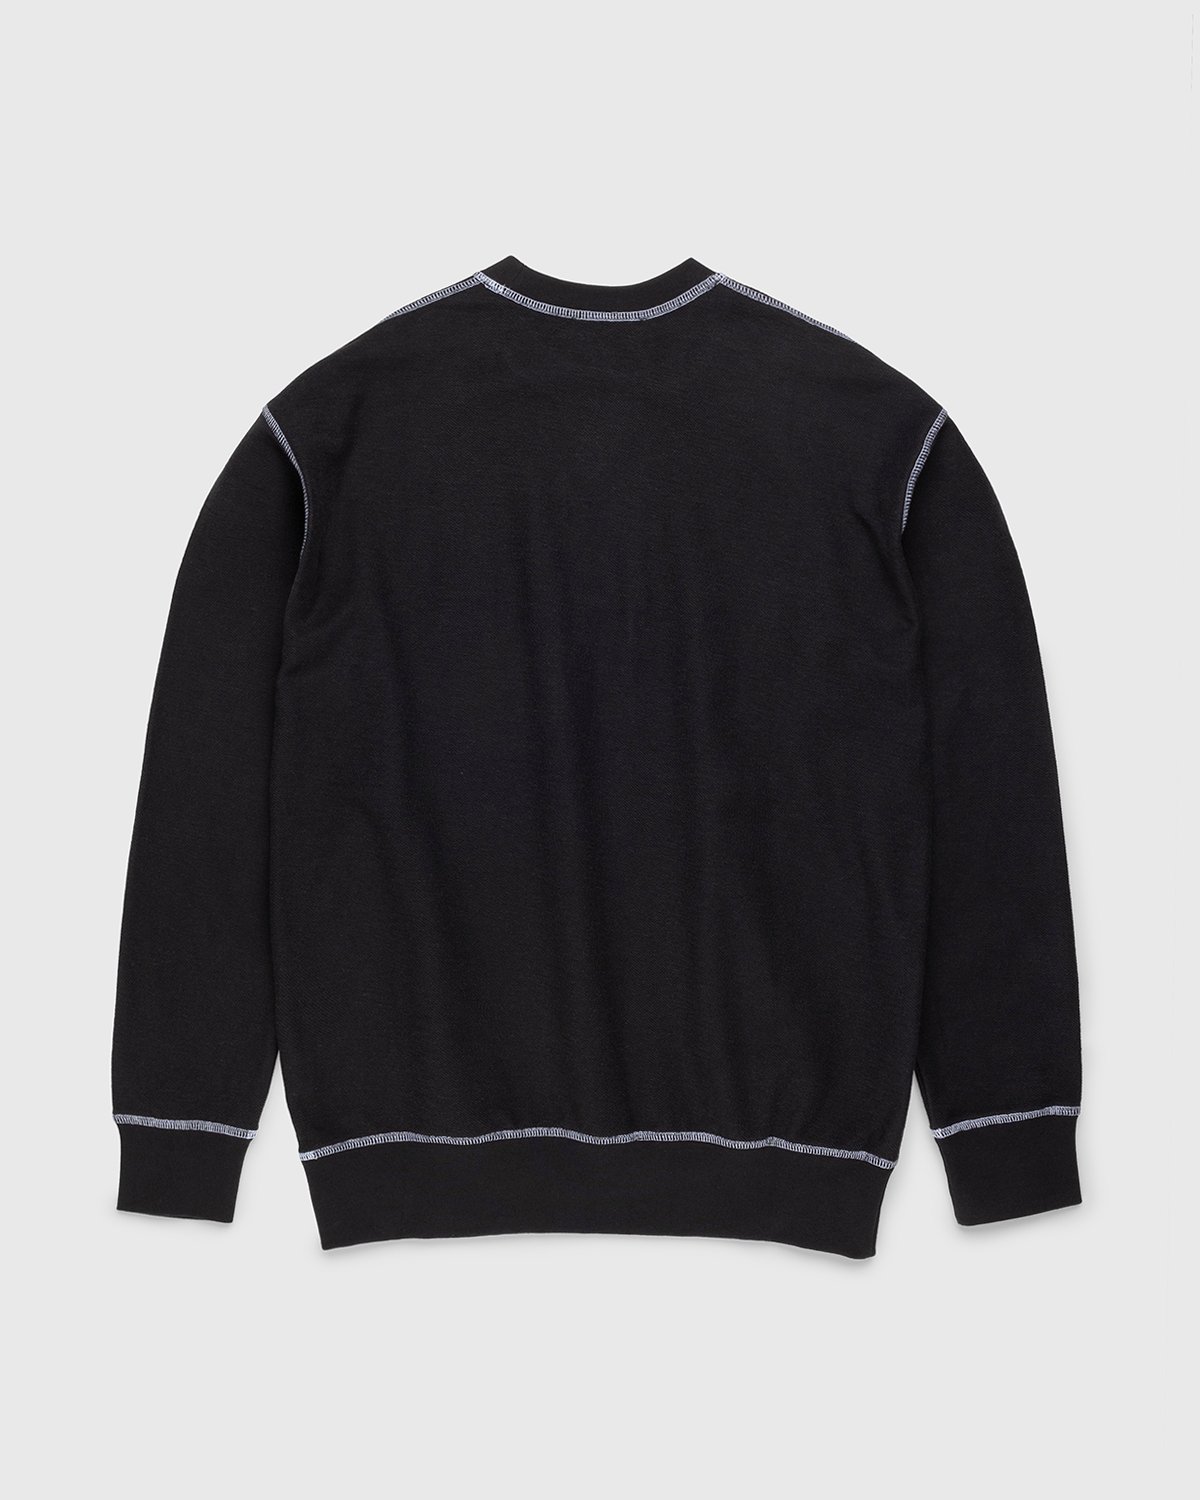 J.W. Anderson - Inside Out Contrast Sweatshirt Black - Clothing - Black - Image 2